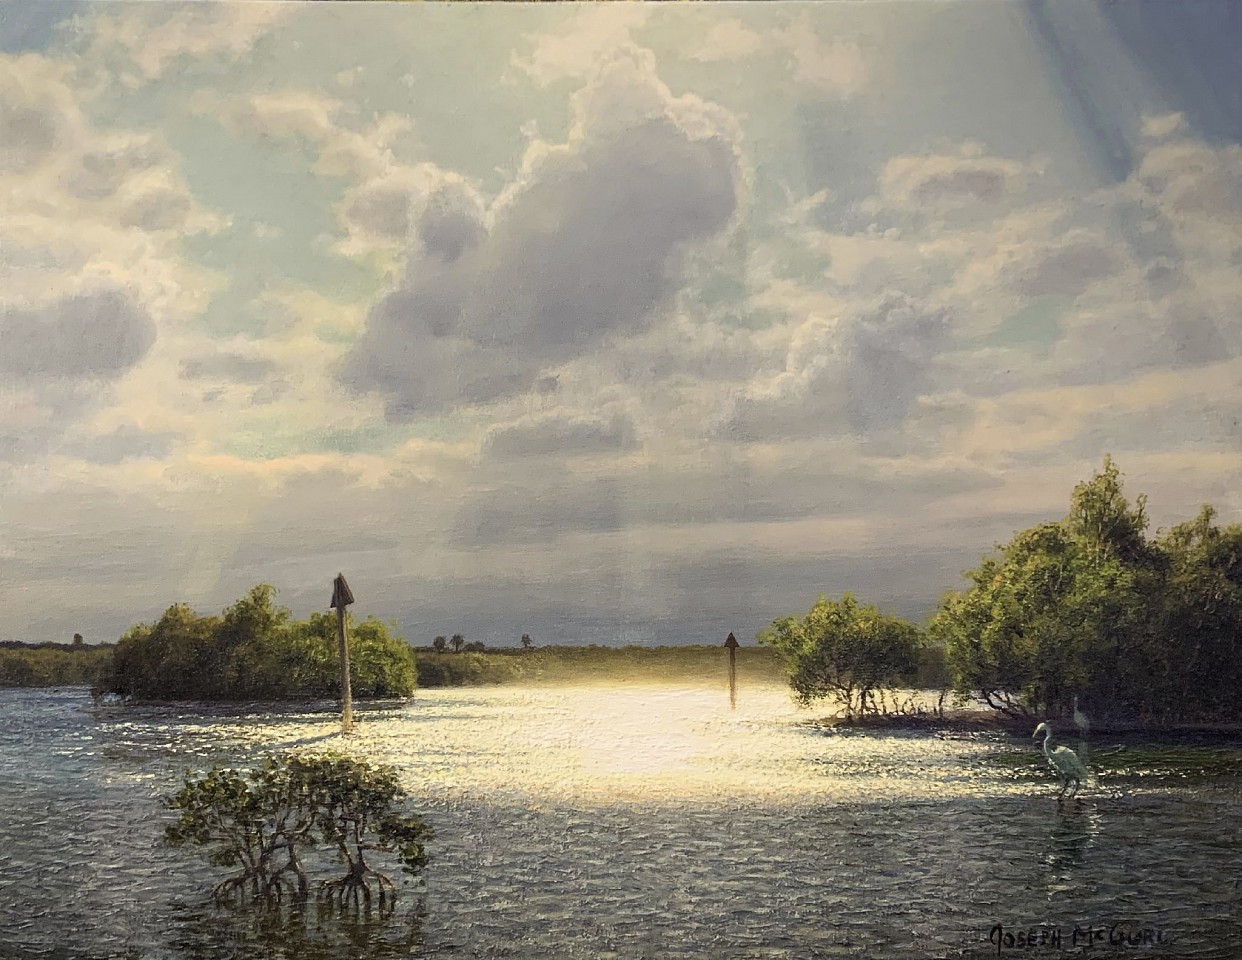 Joseph McGurl, Florida Skies, 2019
oil on panel, 14 x 18 in. (35.6 x 45.7 cm)
JM191105